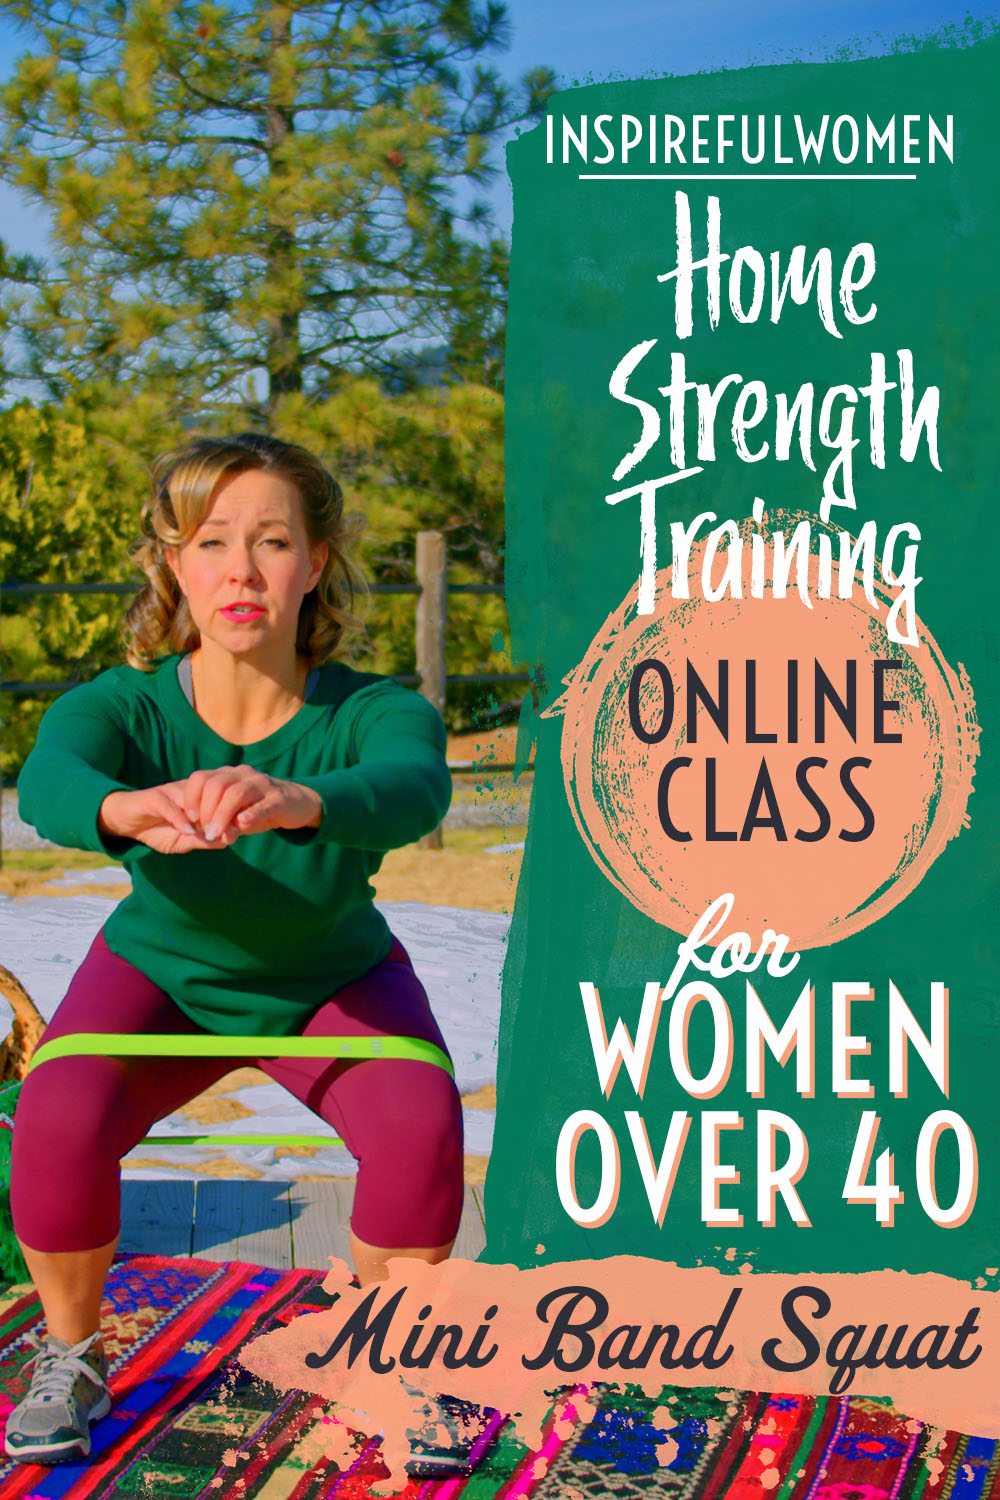 mini-band-squats-glute-medius-hip-external-rotators-lower-body-exercise-home-resistance-training-women-40-plus